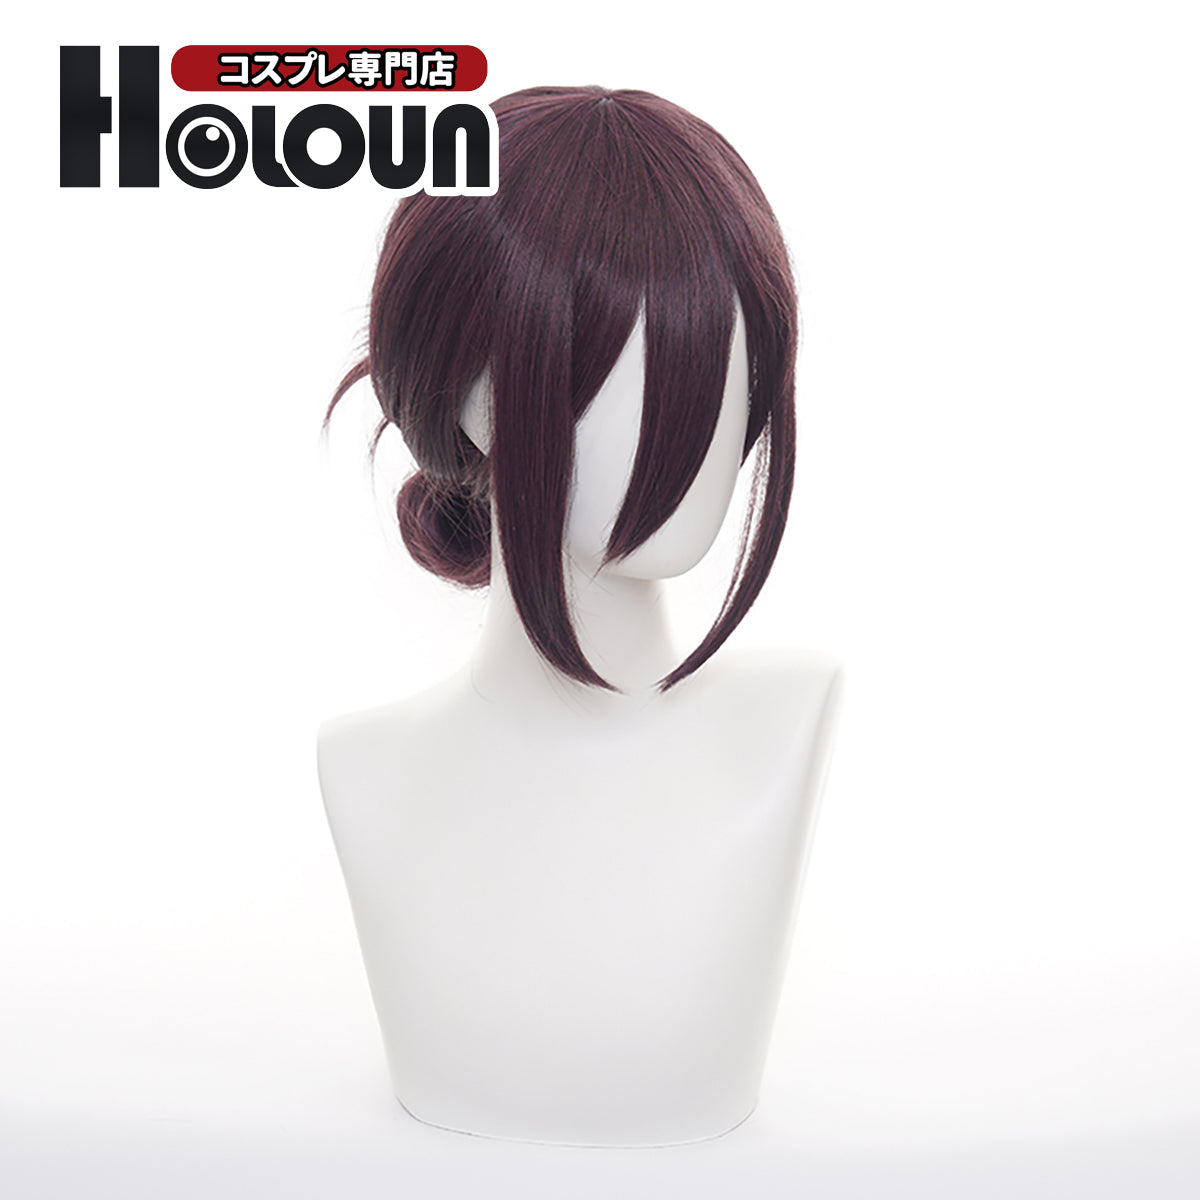 HOLOUN Anime Cosplay Universal Wig For Chainsaw Reze Fake Hair Halloween Christmas Party Gift New